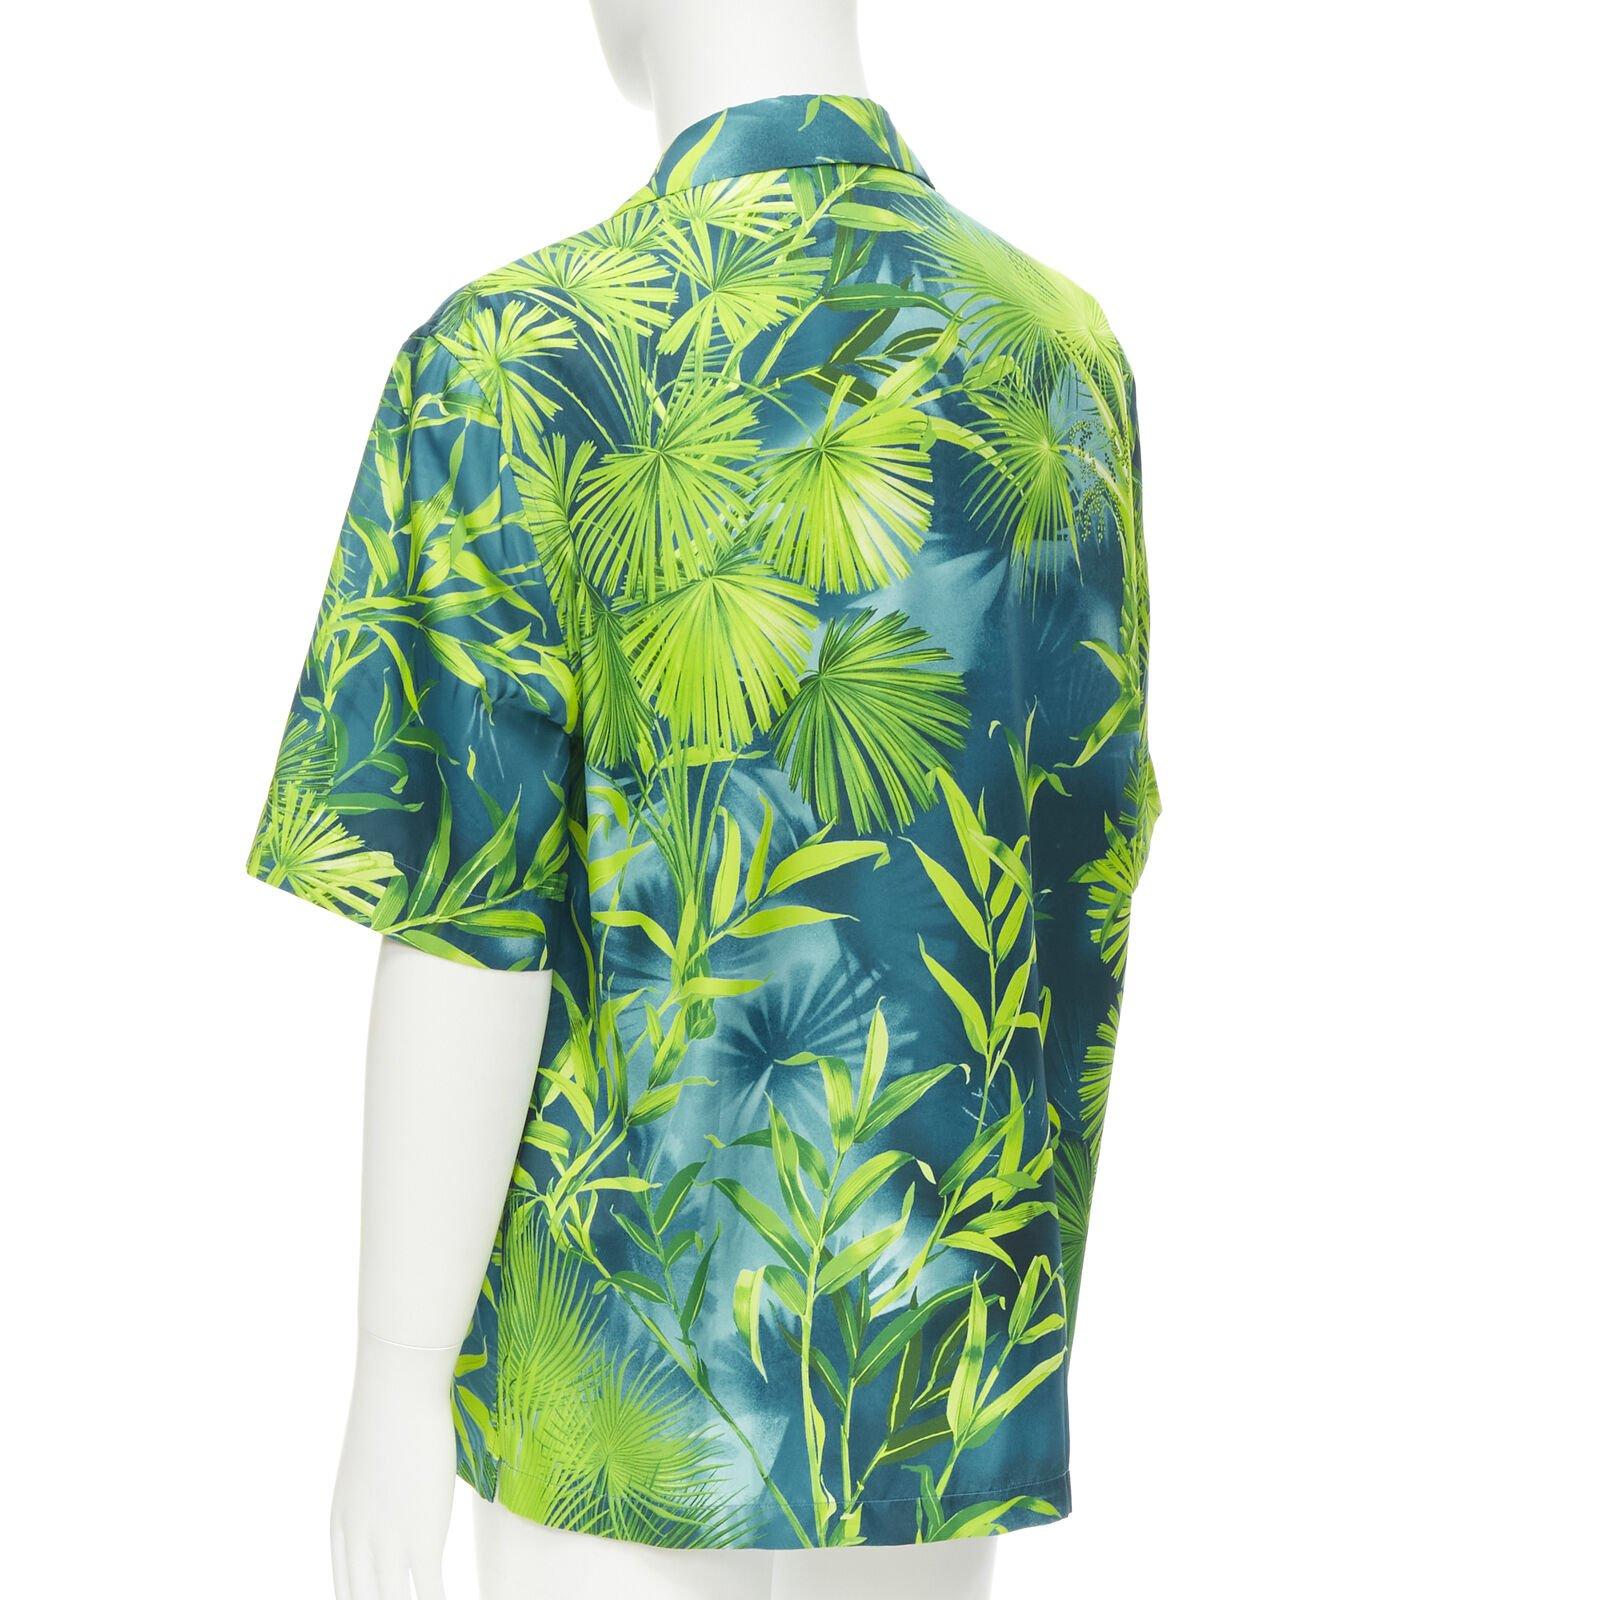 VERSACE 2020 Iconic JLo Jungle print green tropical print shirt EU41 XL For Sale 2